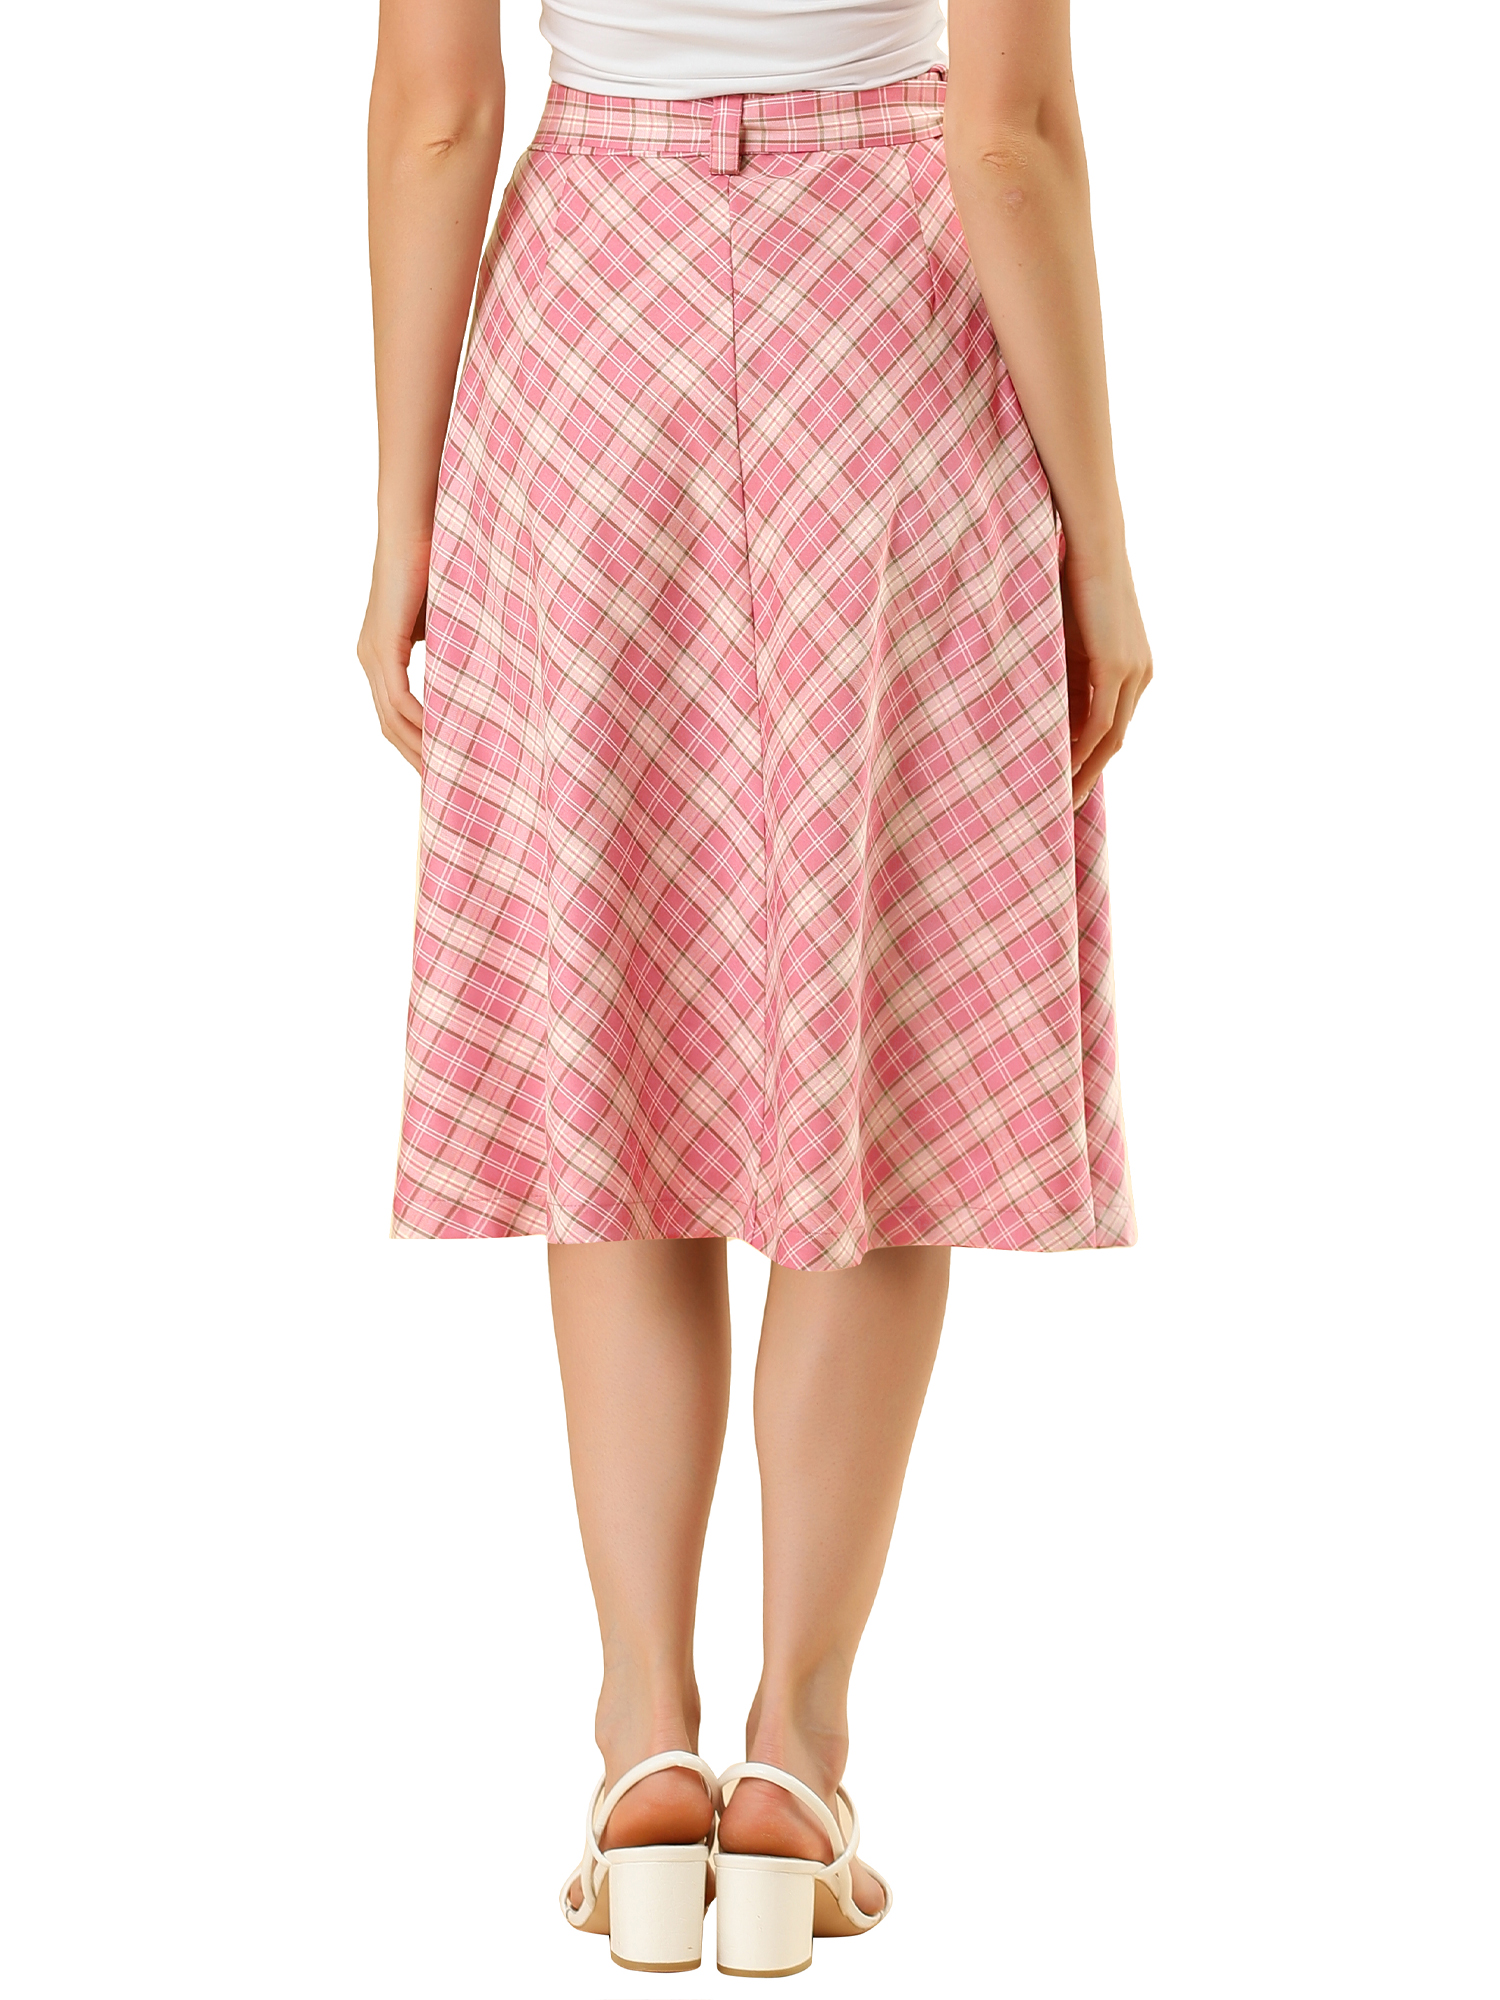 Unique Bargains Women's Plaid High Waist Belted Vintage A-Line Midi Skirt M Pink - image 4 of 8